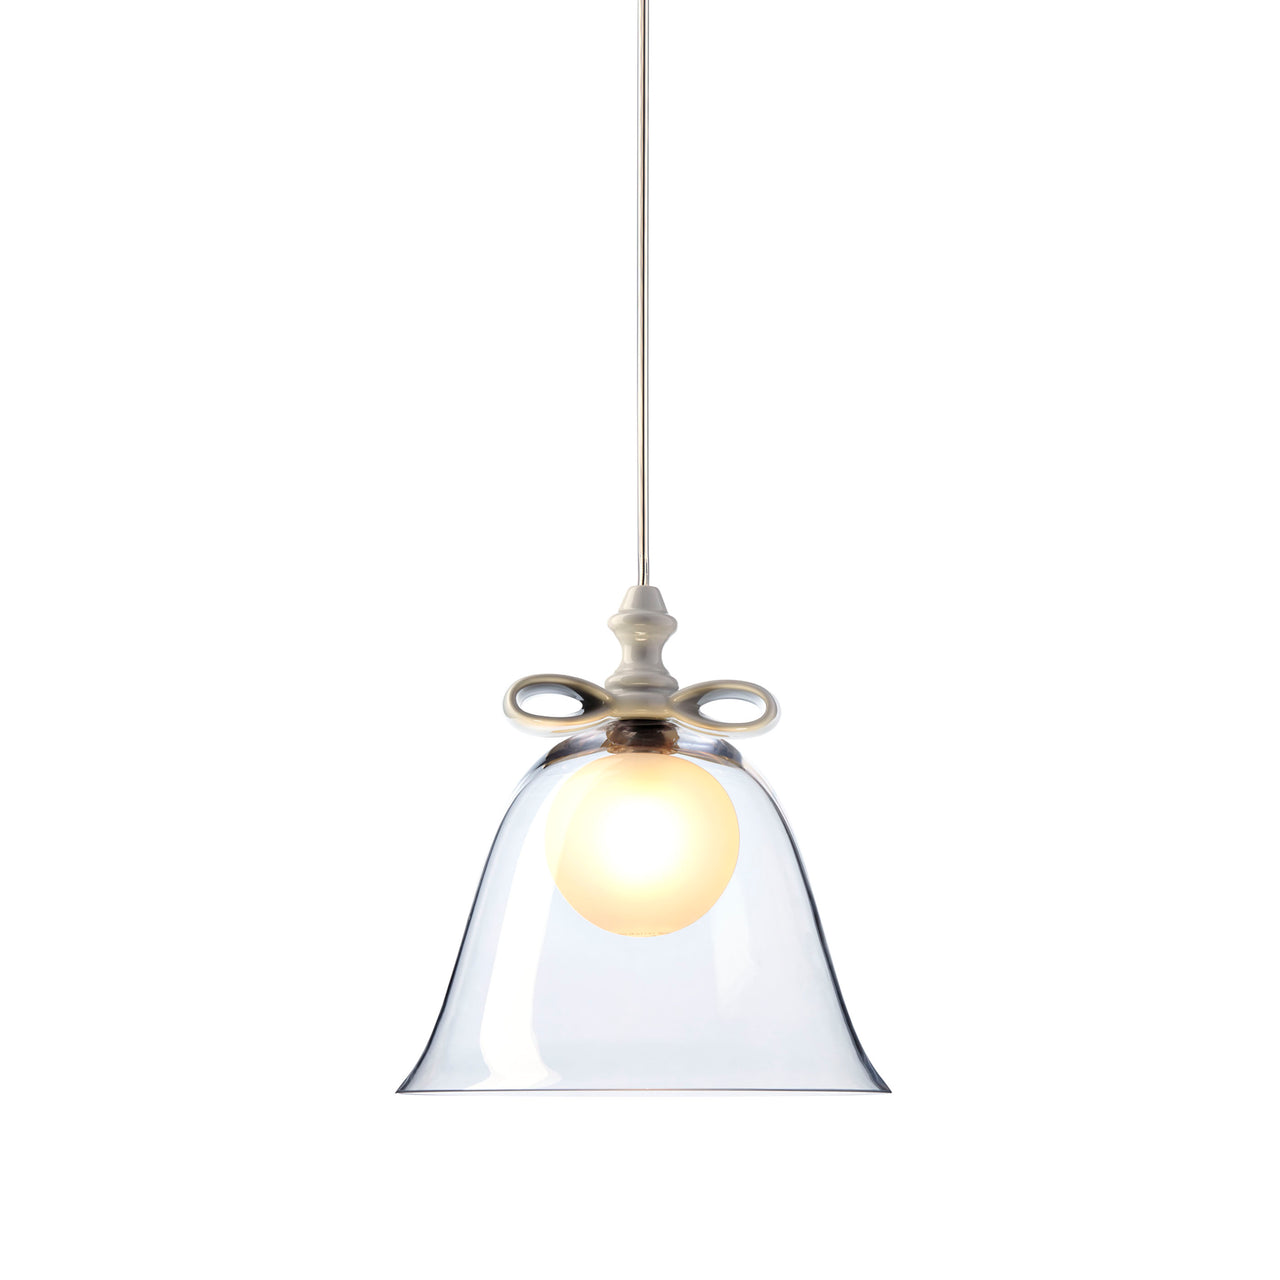 Bell Lamp: White + Transparent 